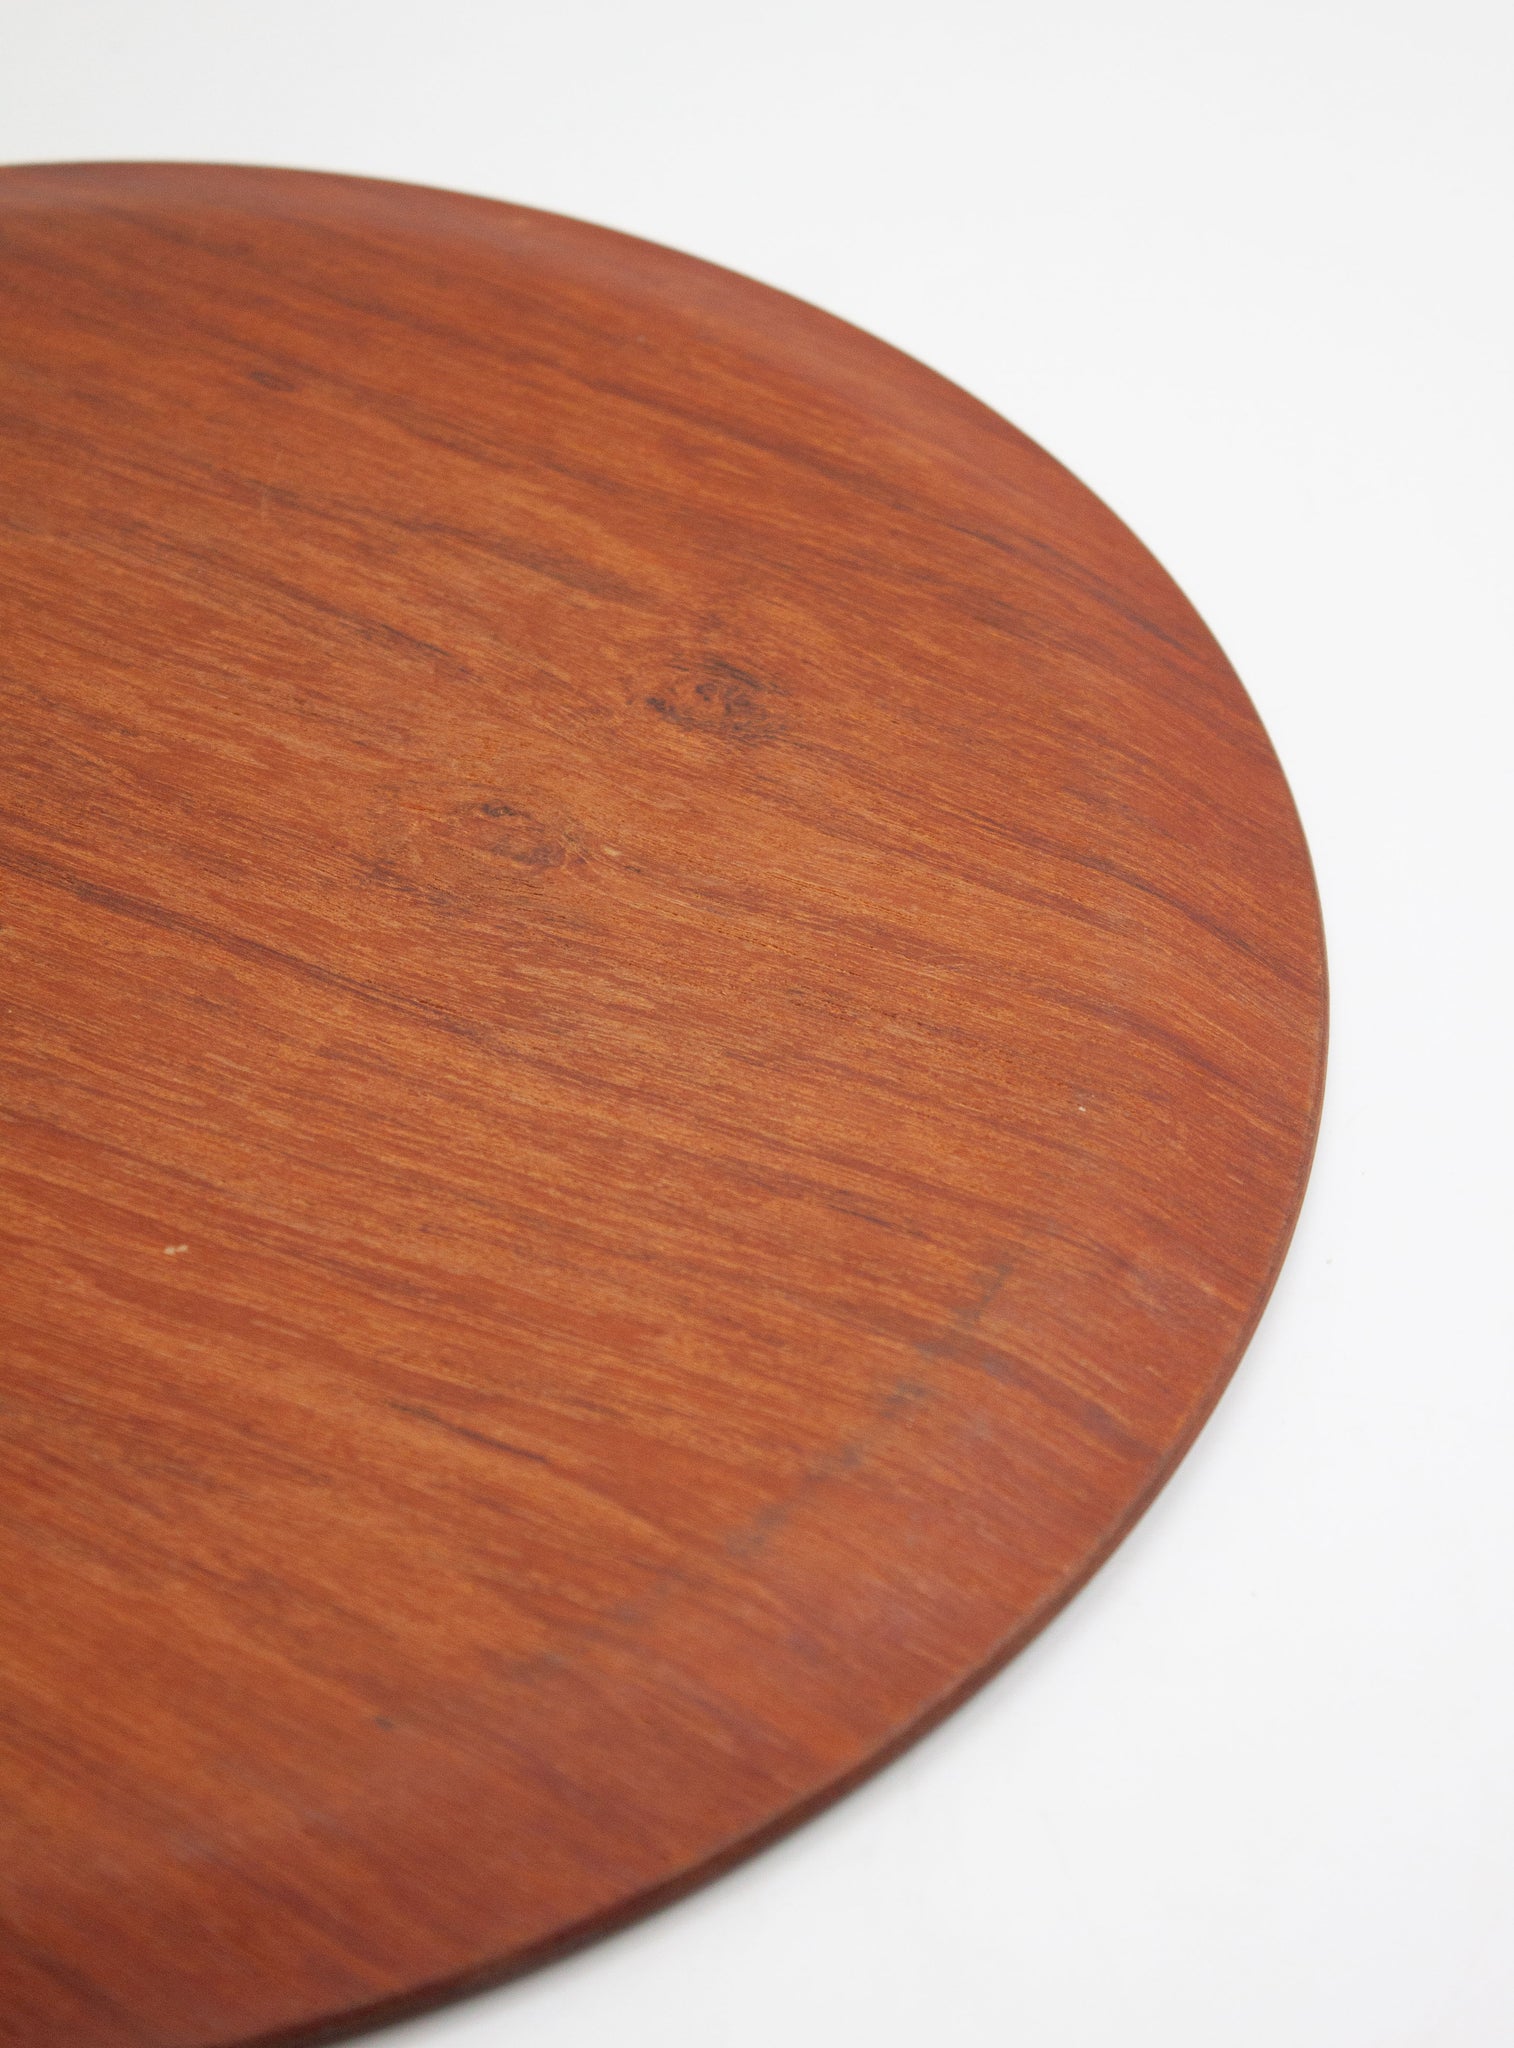 Danish Teak Wooden Plate